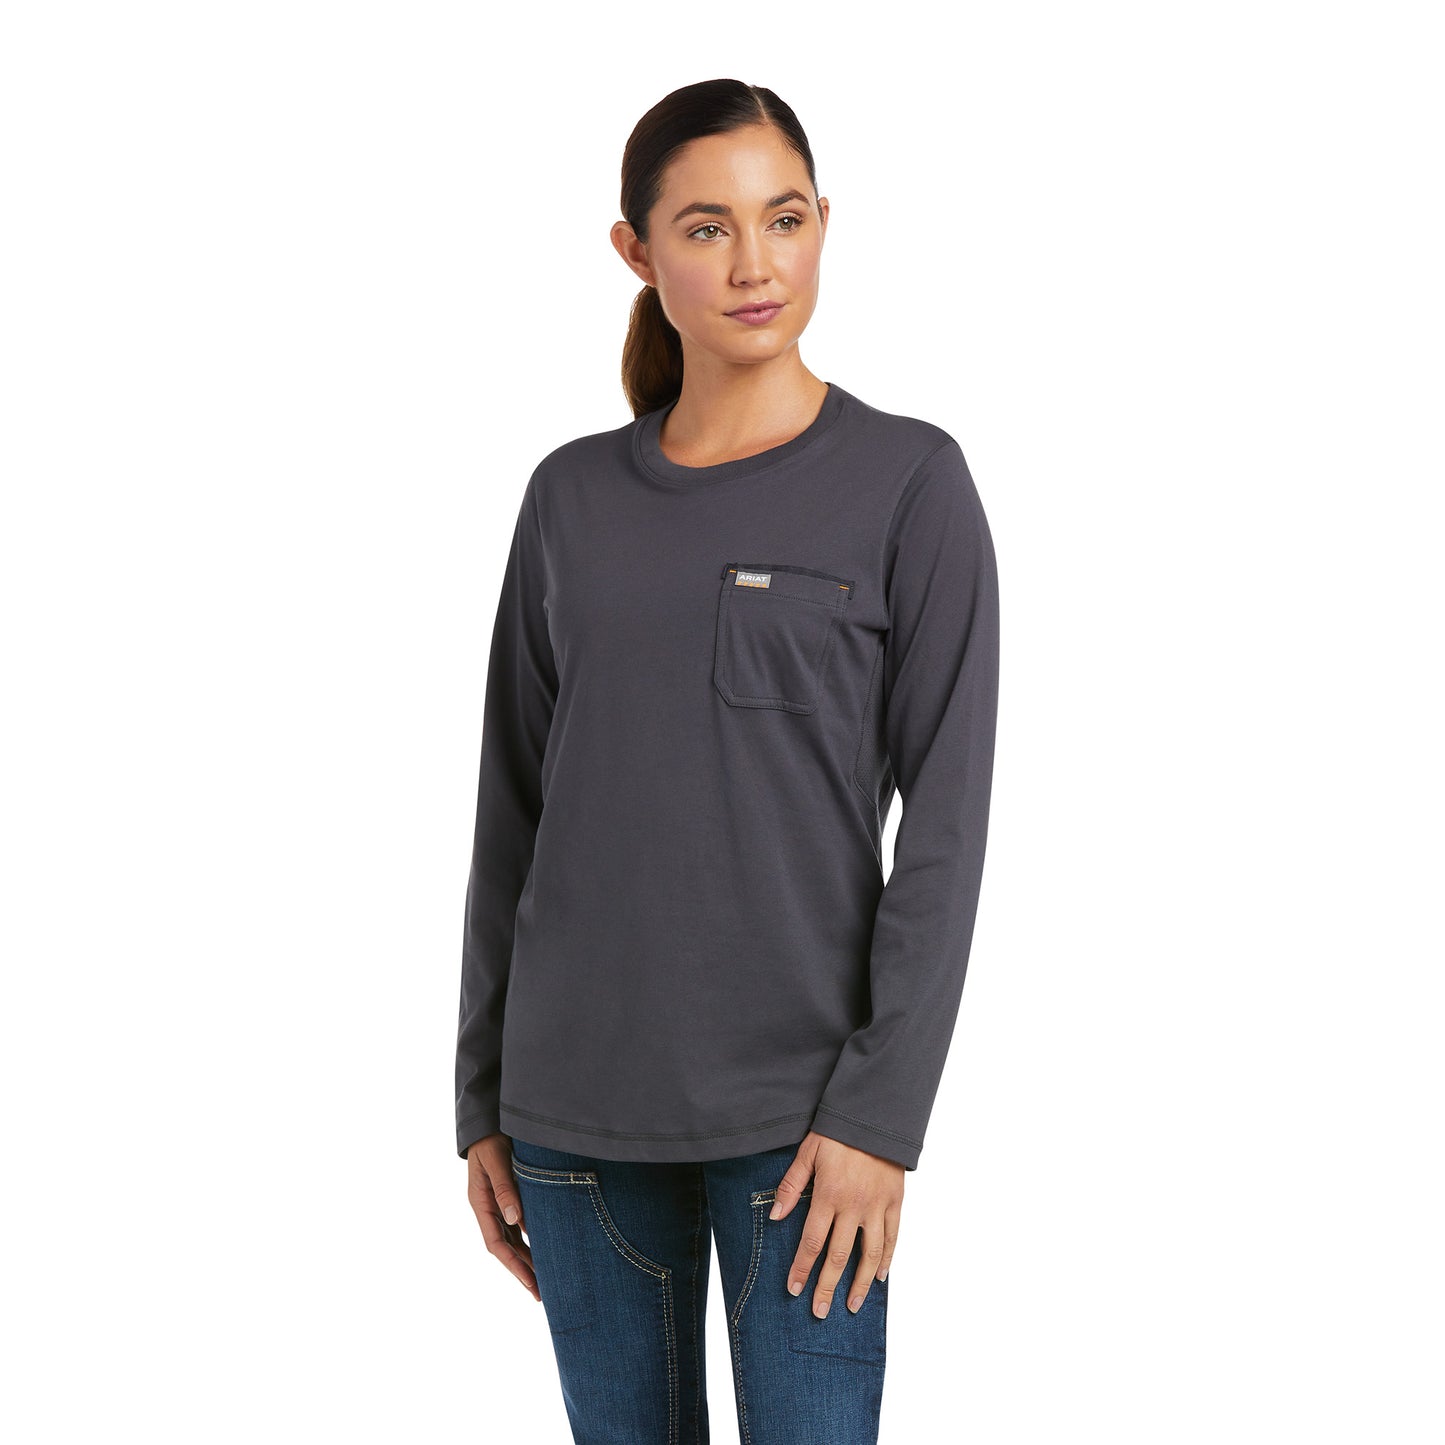 Ariat Women's Rebar Workman High Voltage Grey T-Shirt 10037707